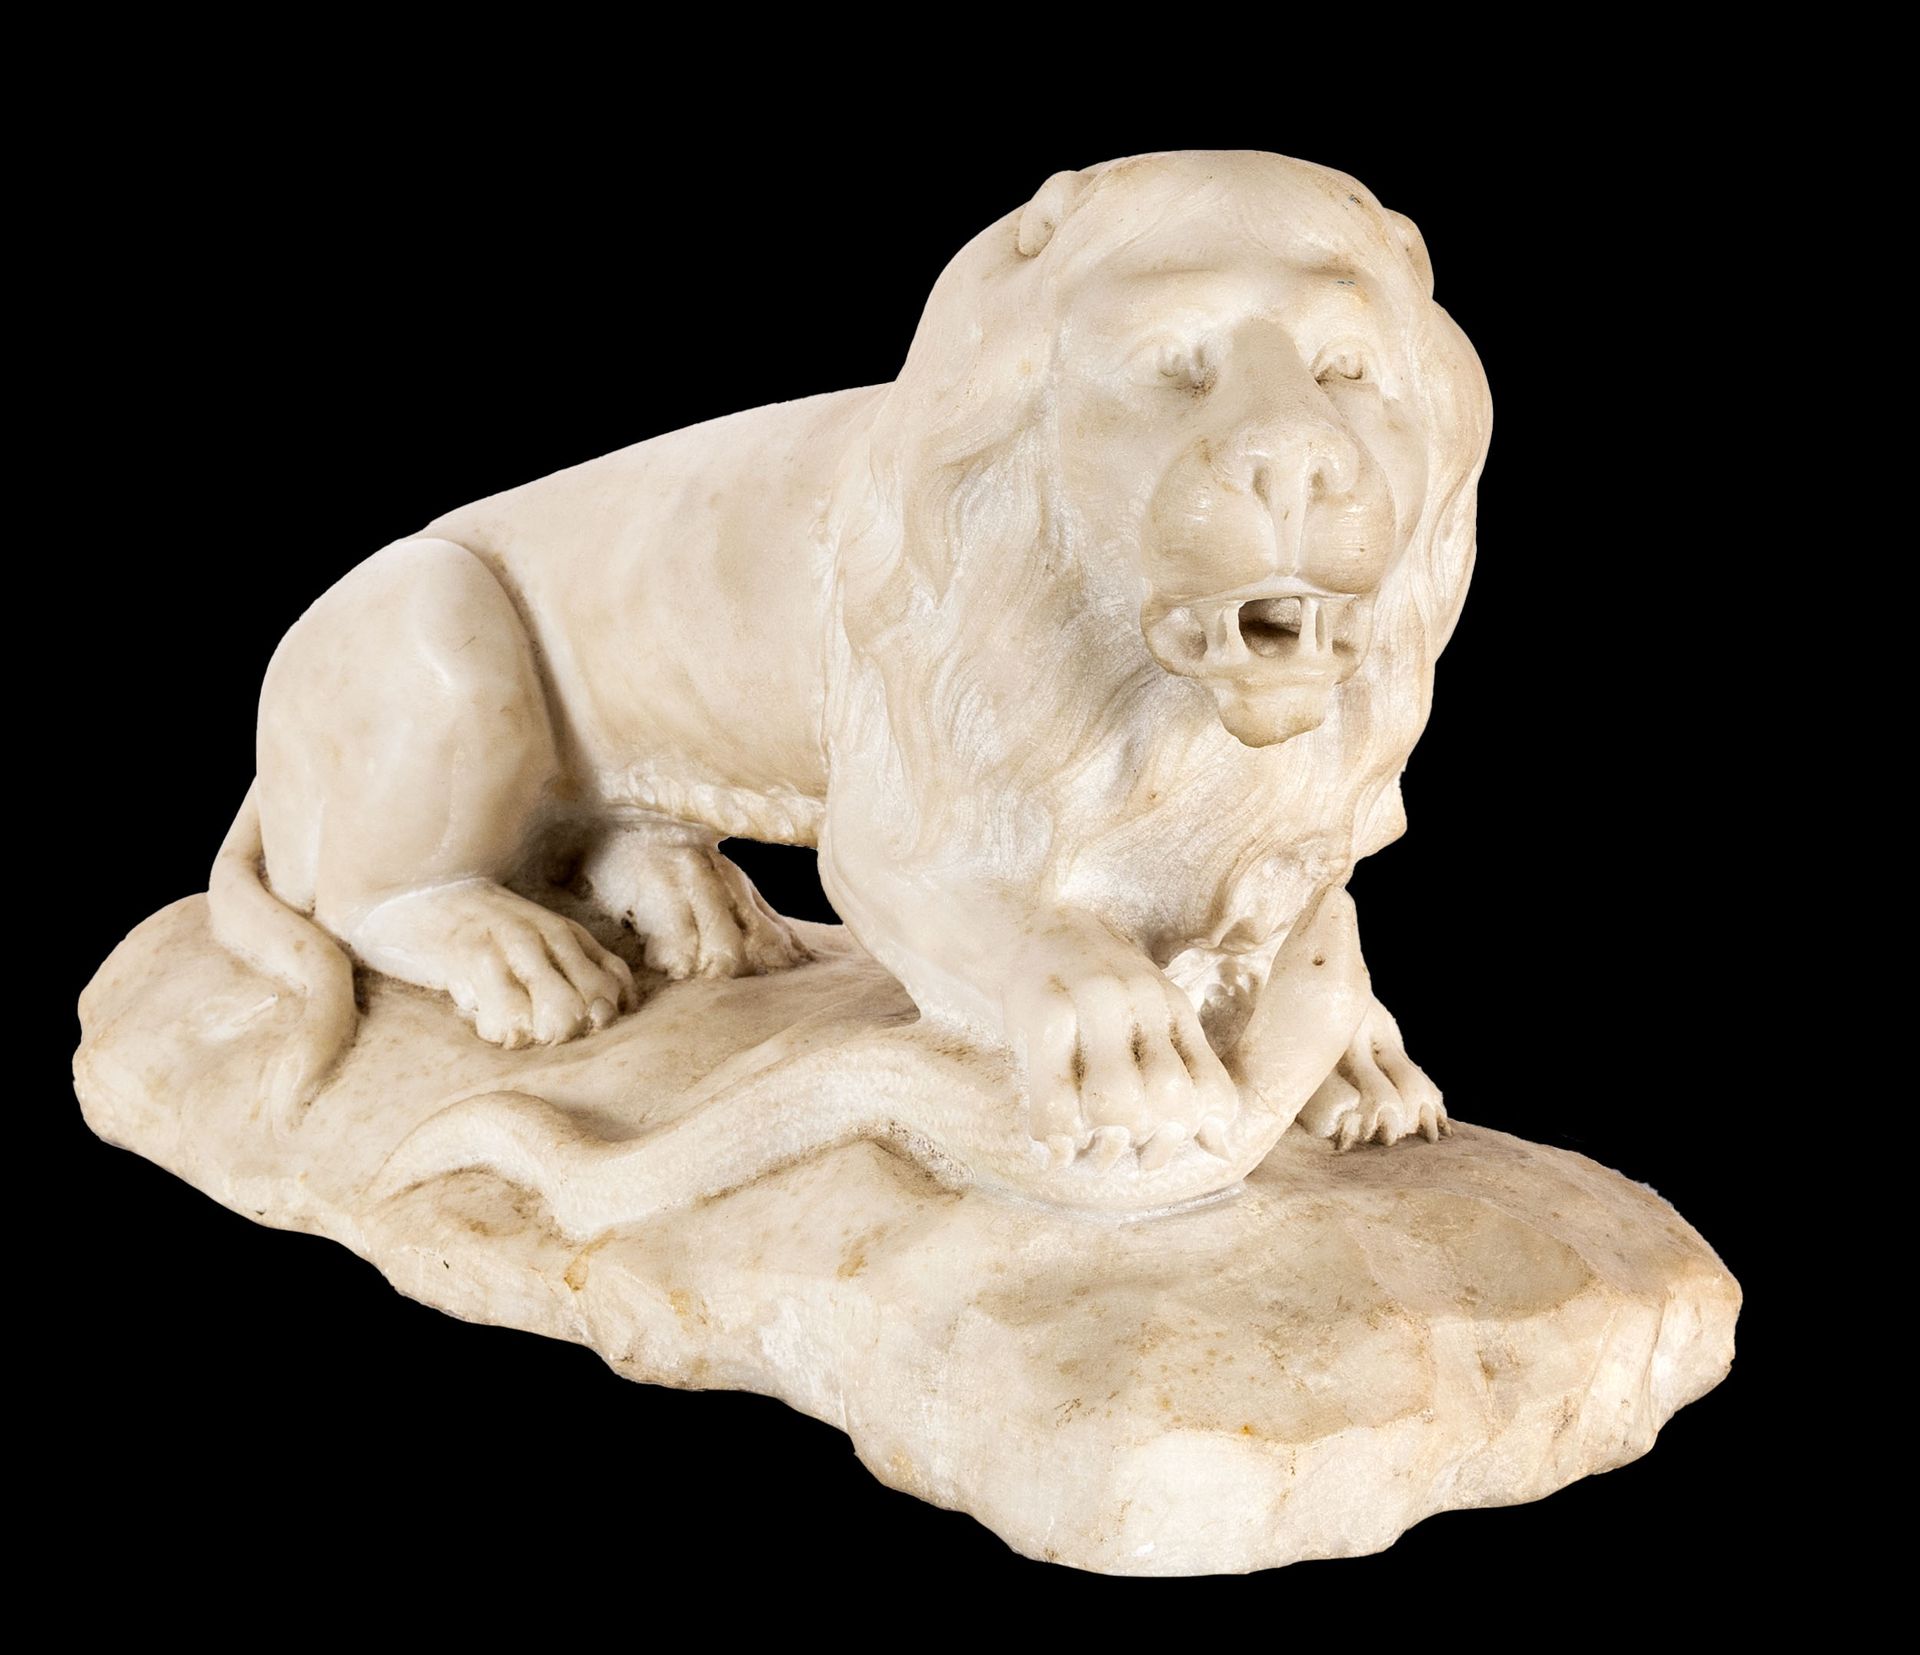 Null 19世纪的雕塑家 - 卧狮

大理石雕塑

37 x 24 x 16 厘米